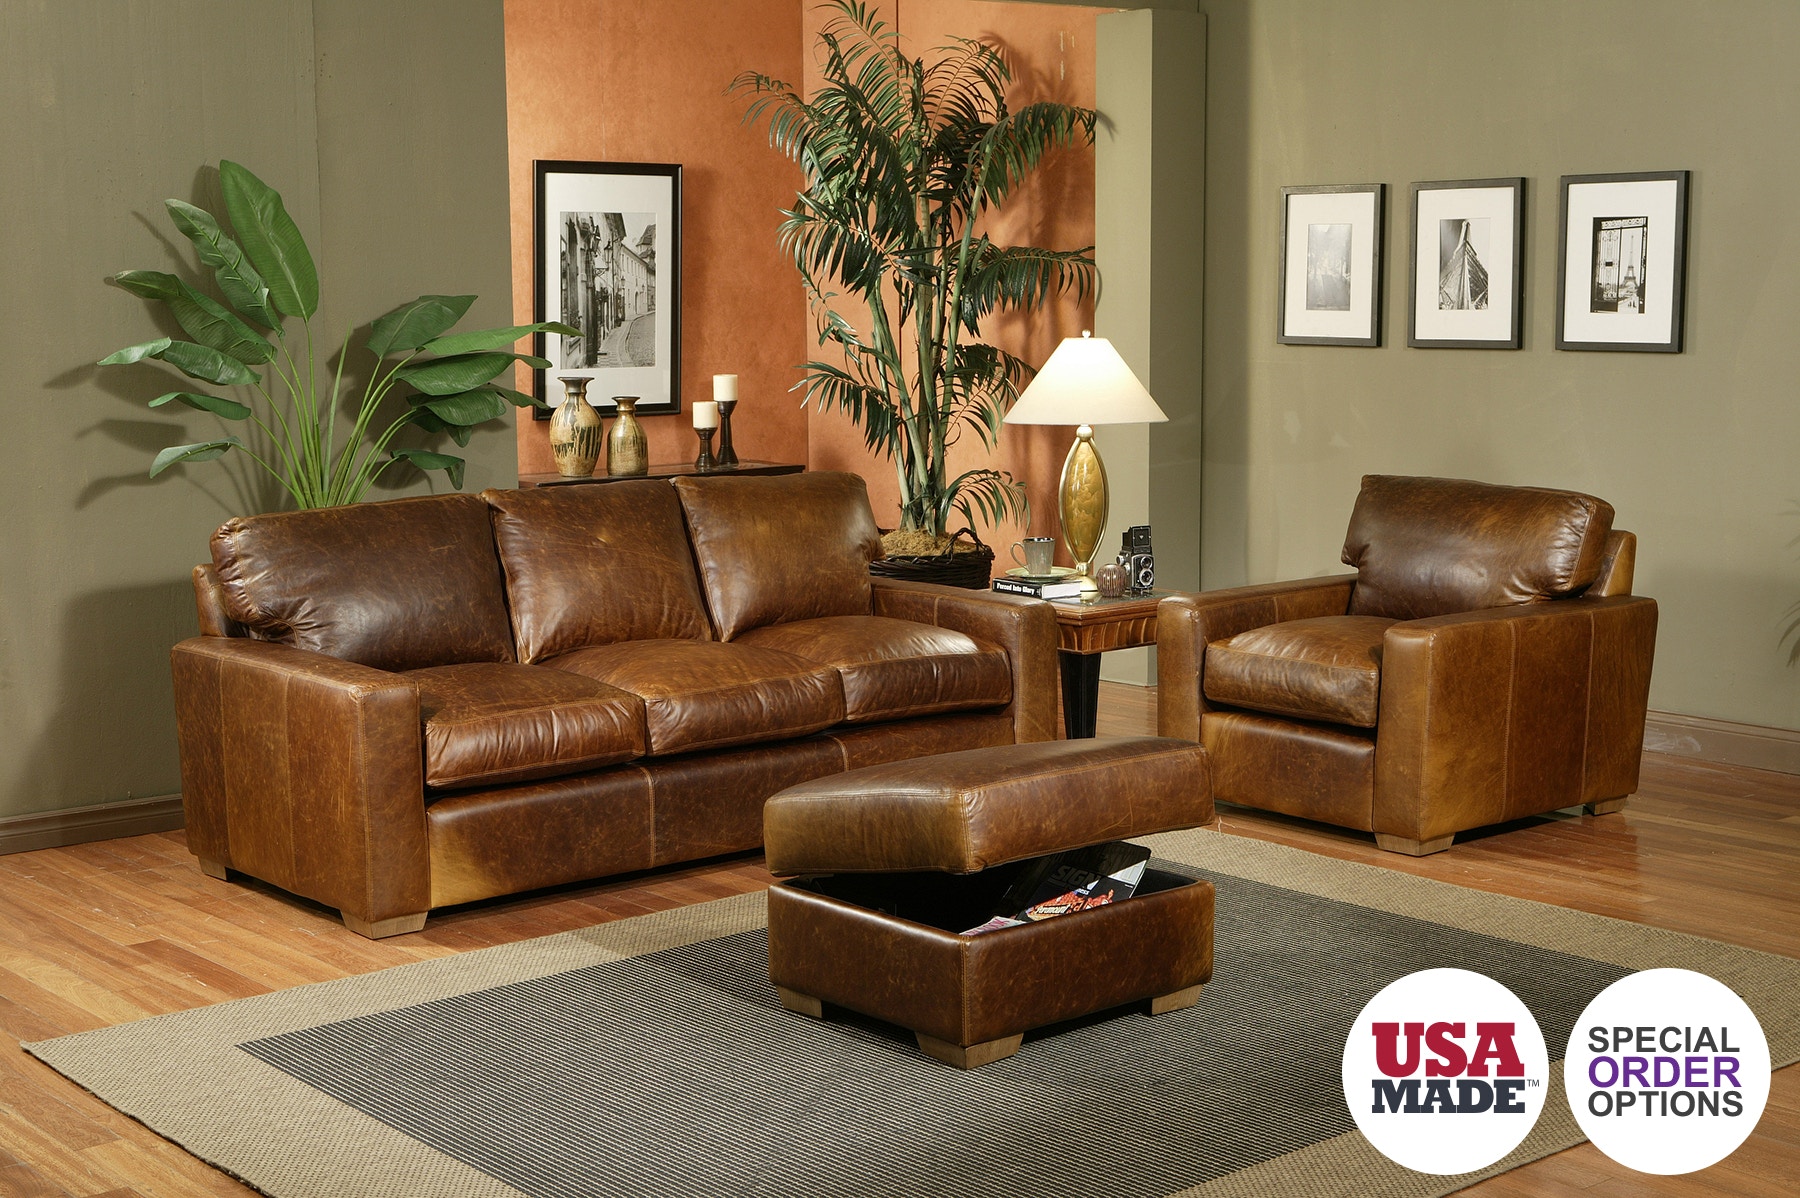 Omnia Living Room Omnia City Craft Leather Sofa City Craft 1034 - Furniture -